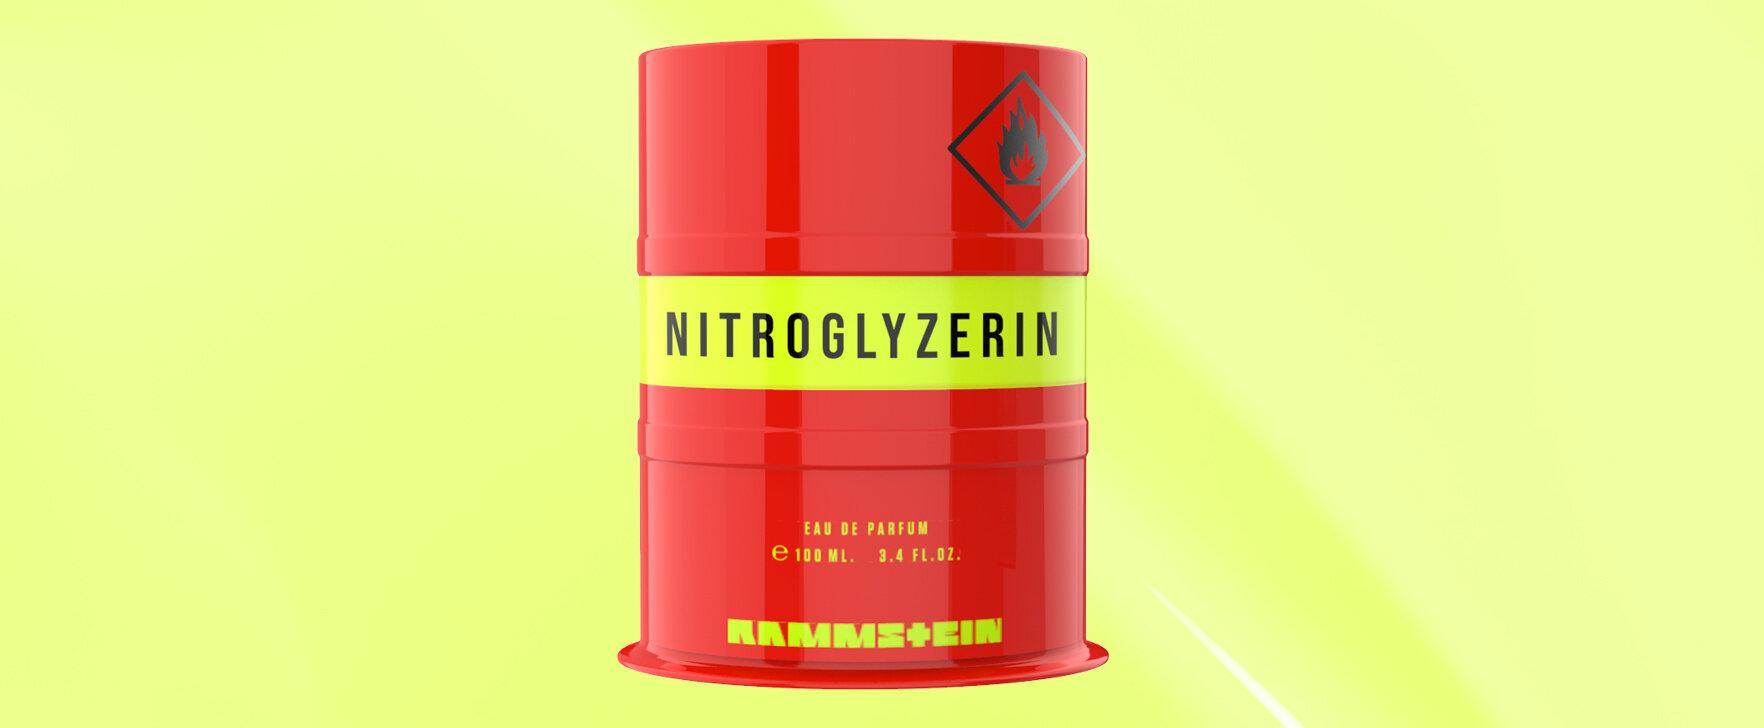 A Fragrance Experience Full of Energy: The New Eau de Parfum Nitroglycerin by Rammstein